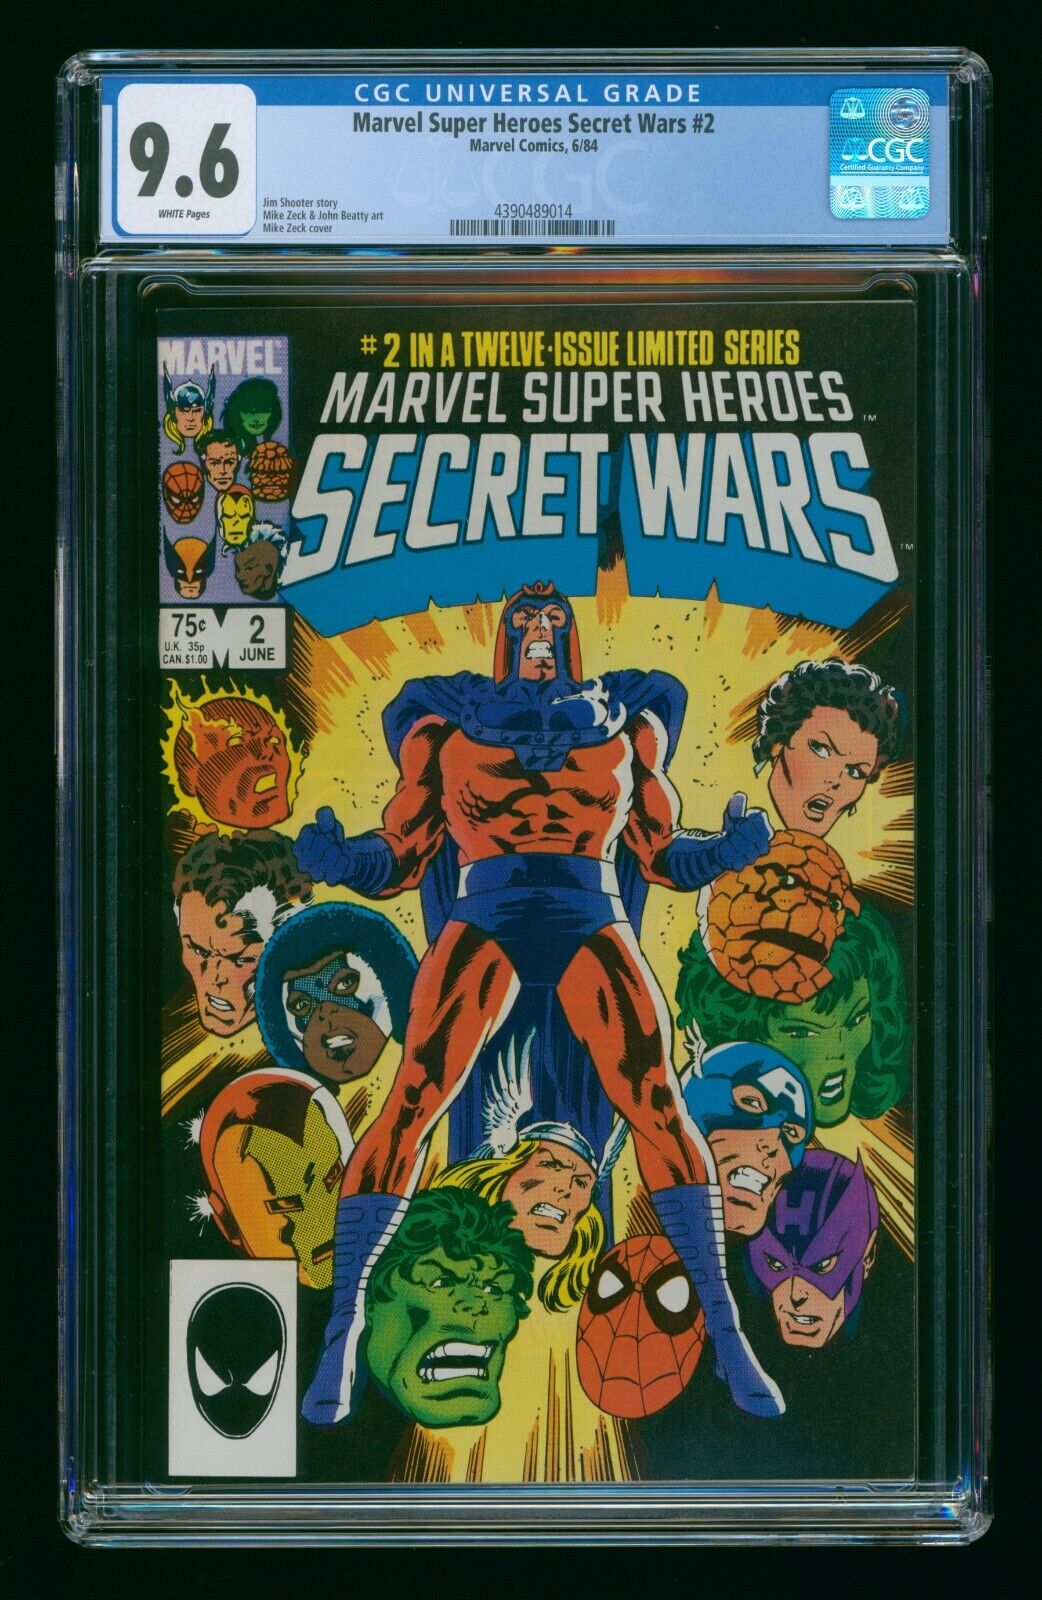 SECRET WARS #2 (1984) CGC 9.6 MARVEL SUPER HEROES WHITE PAGES